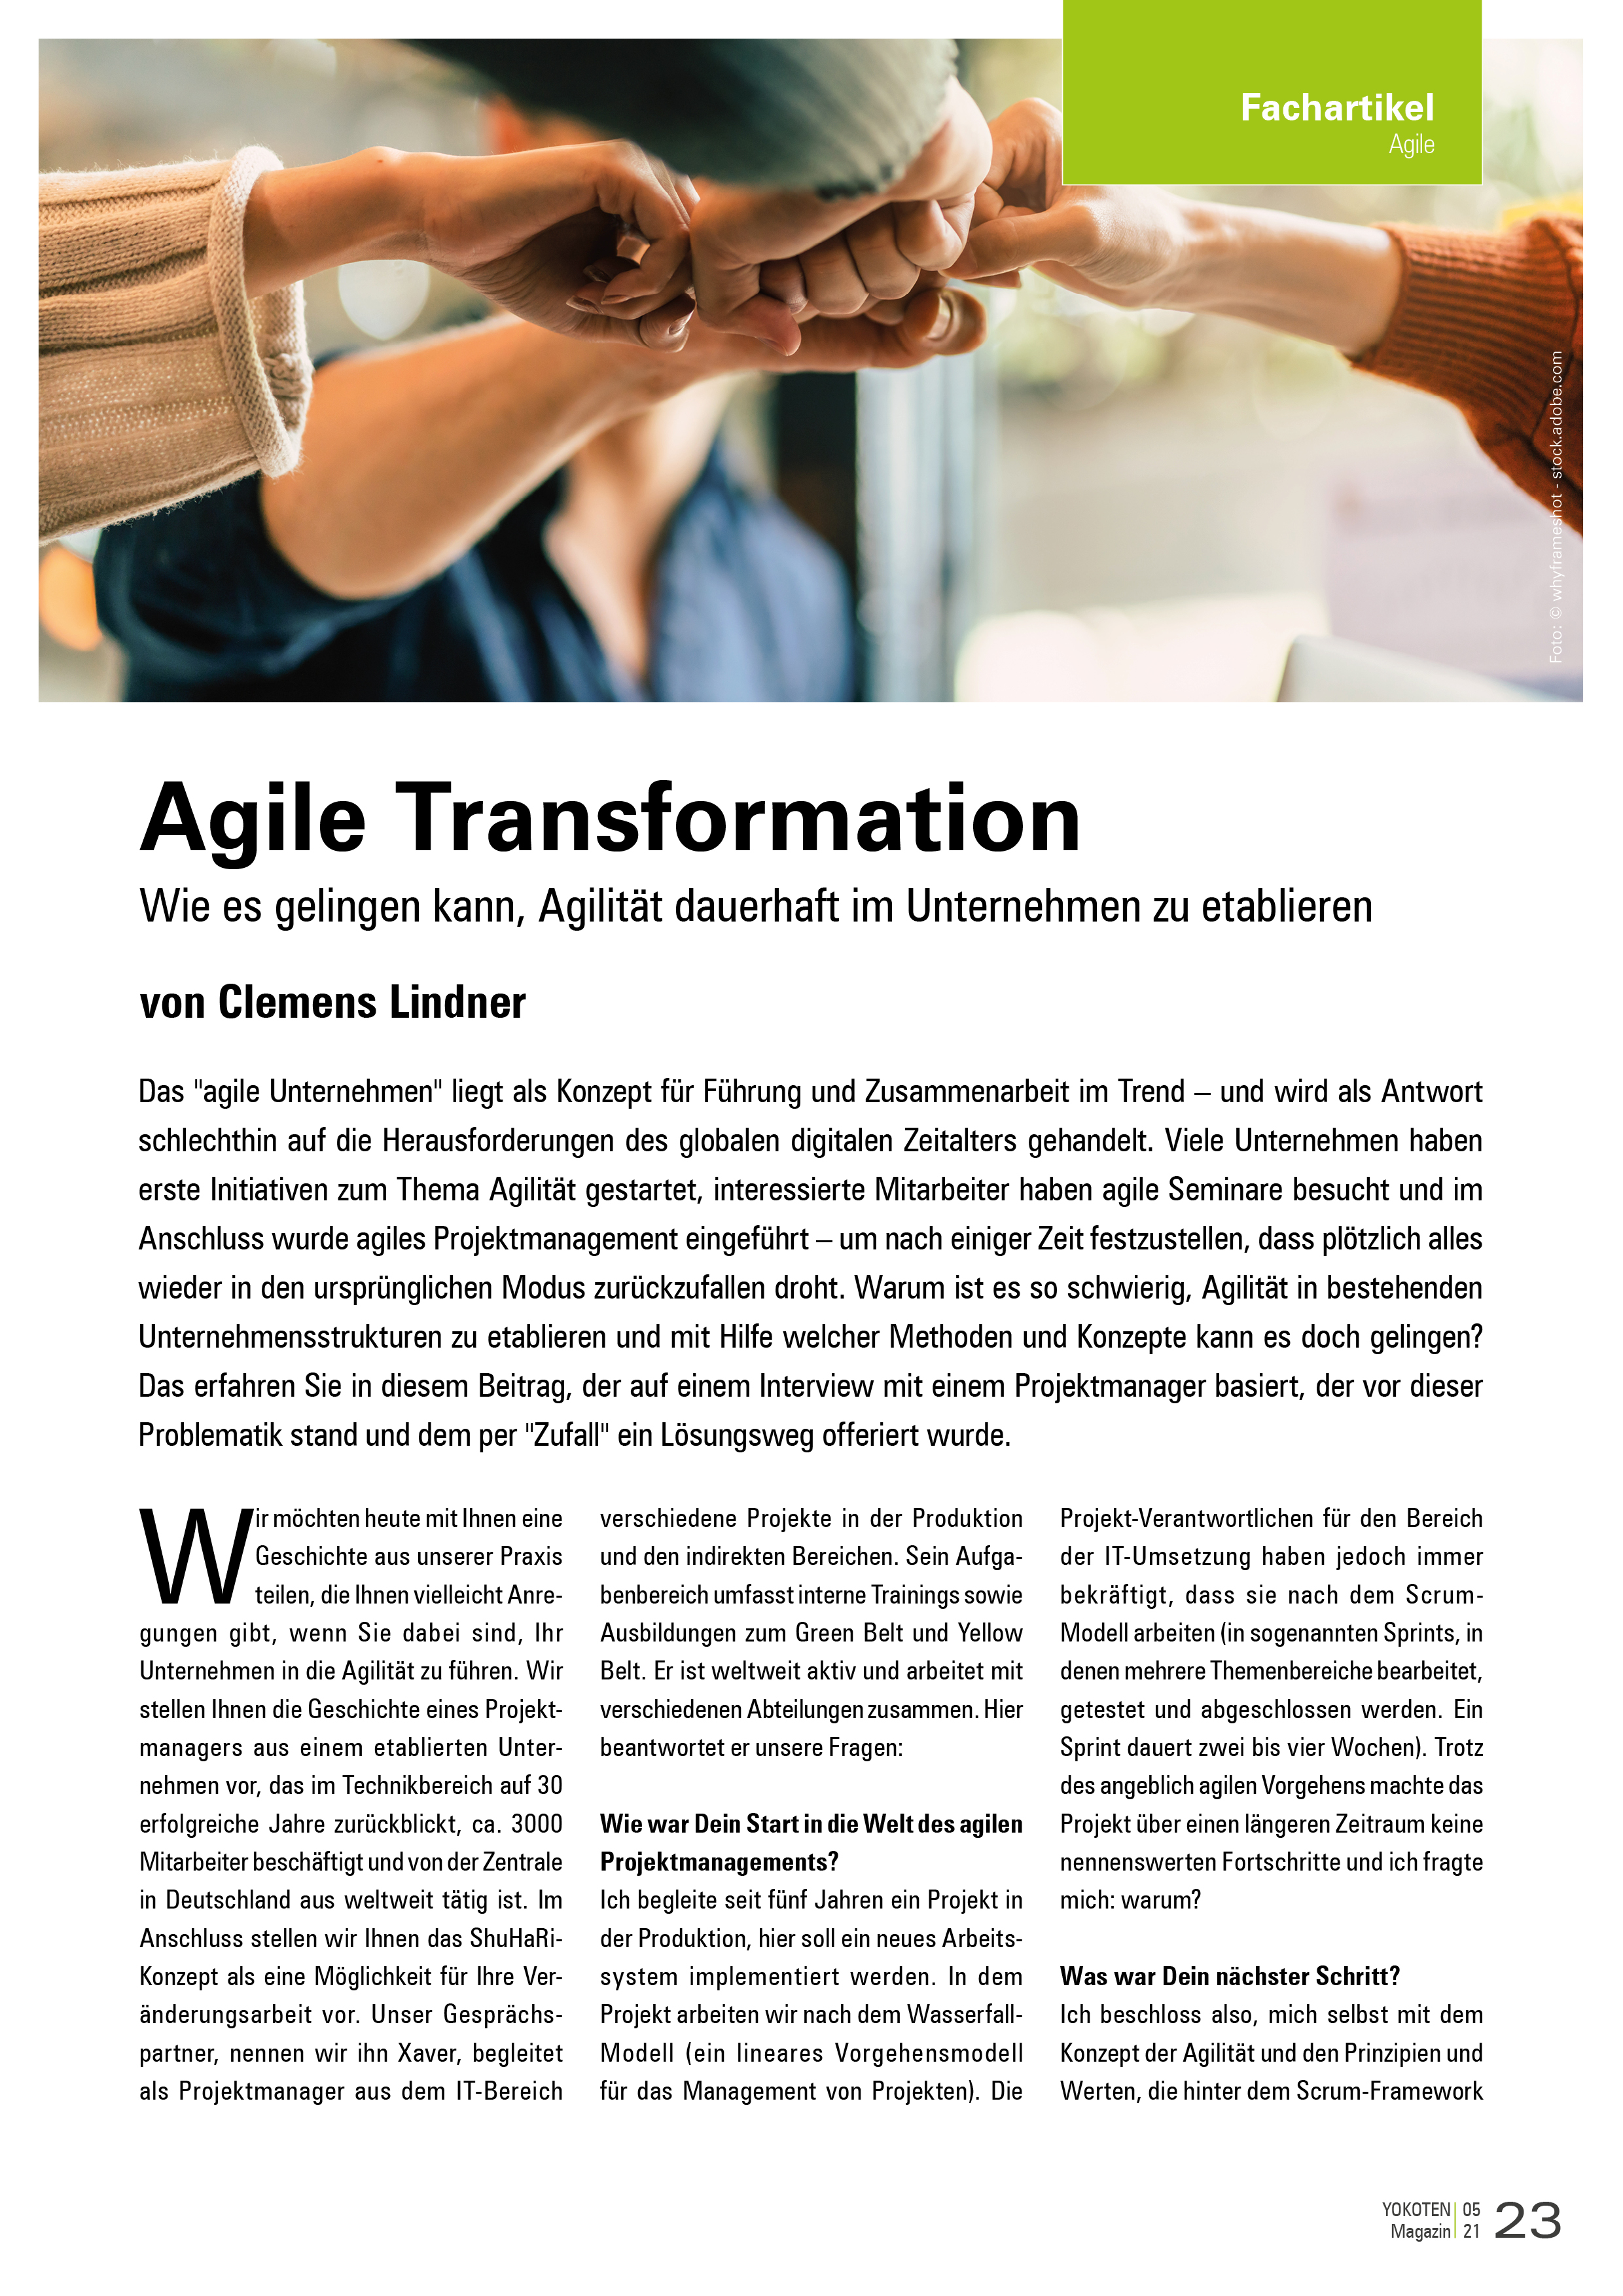 YOKOTEN-Artikel: Agile Transformation